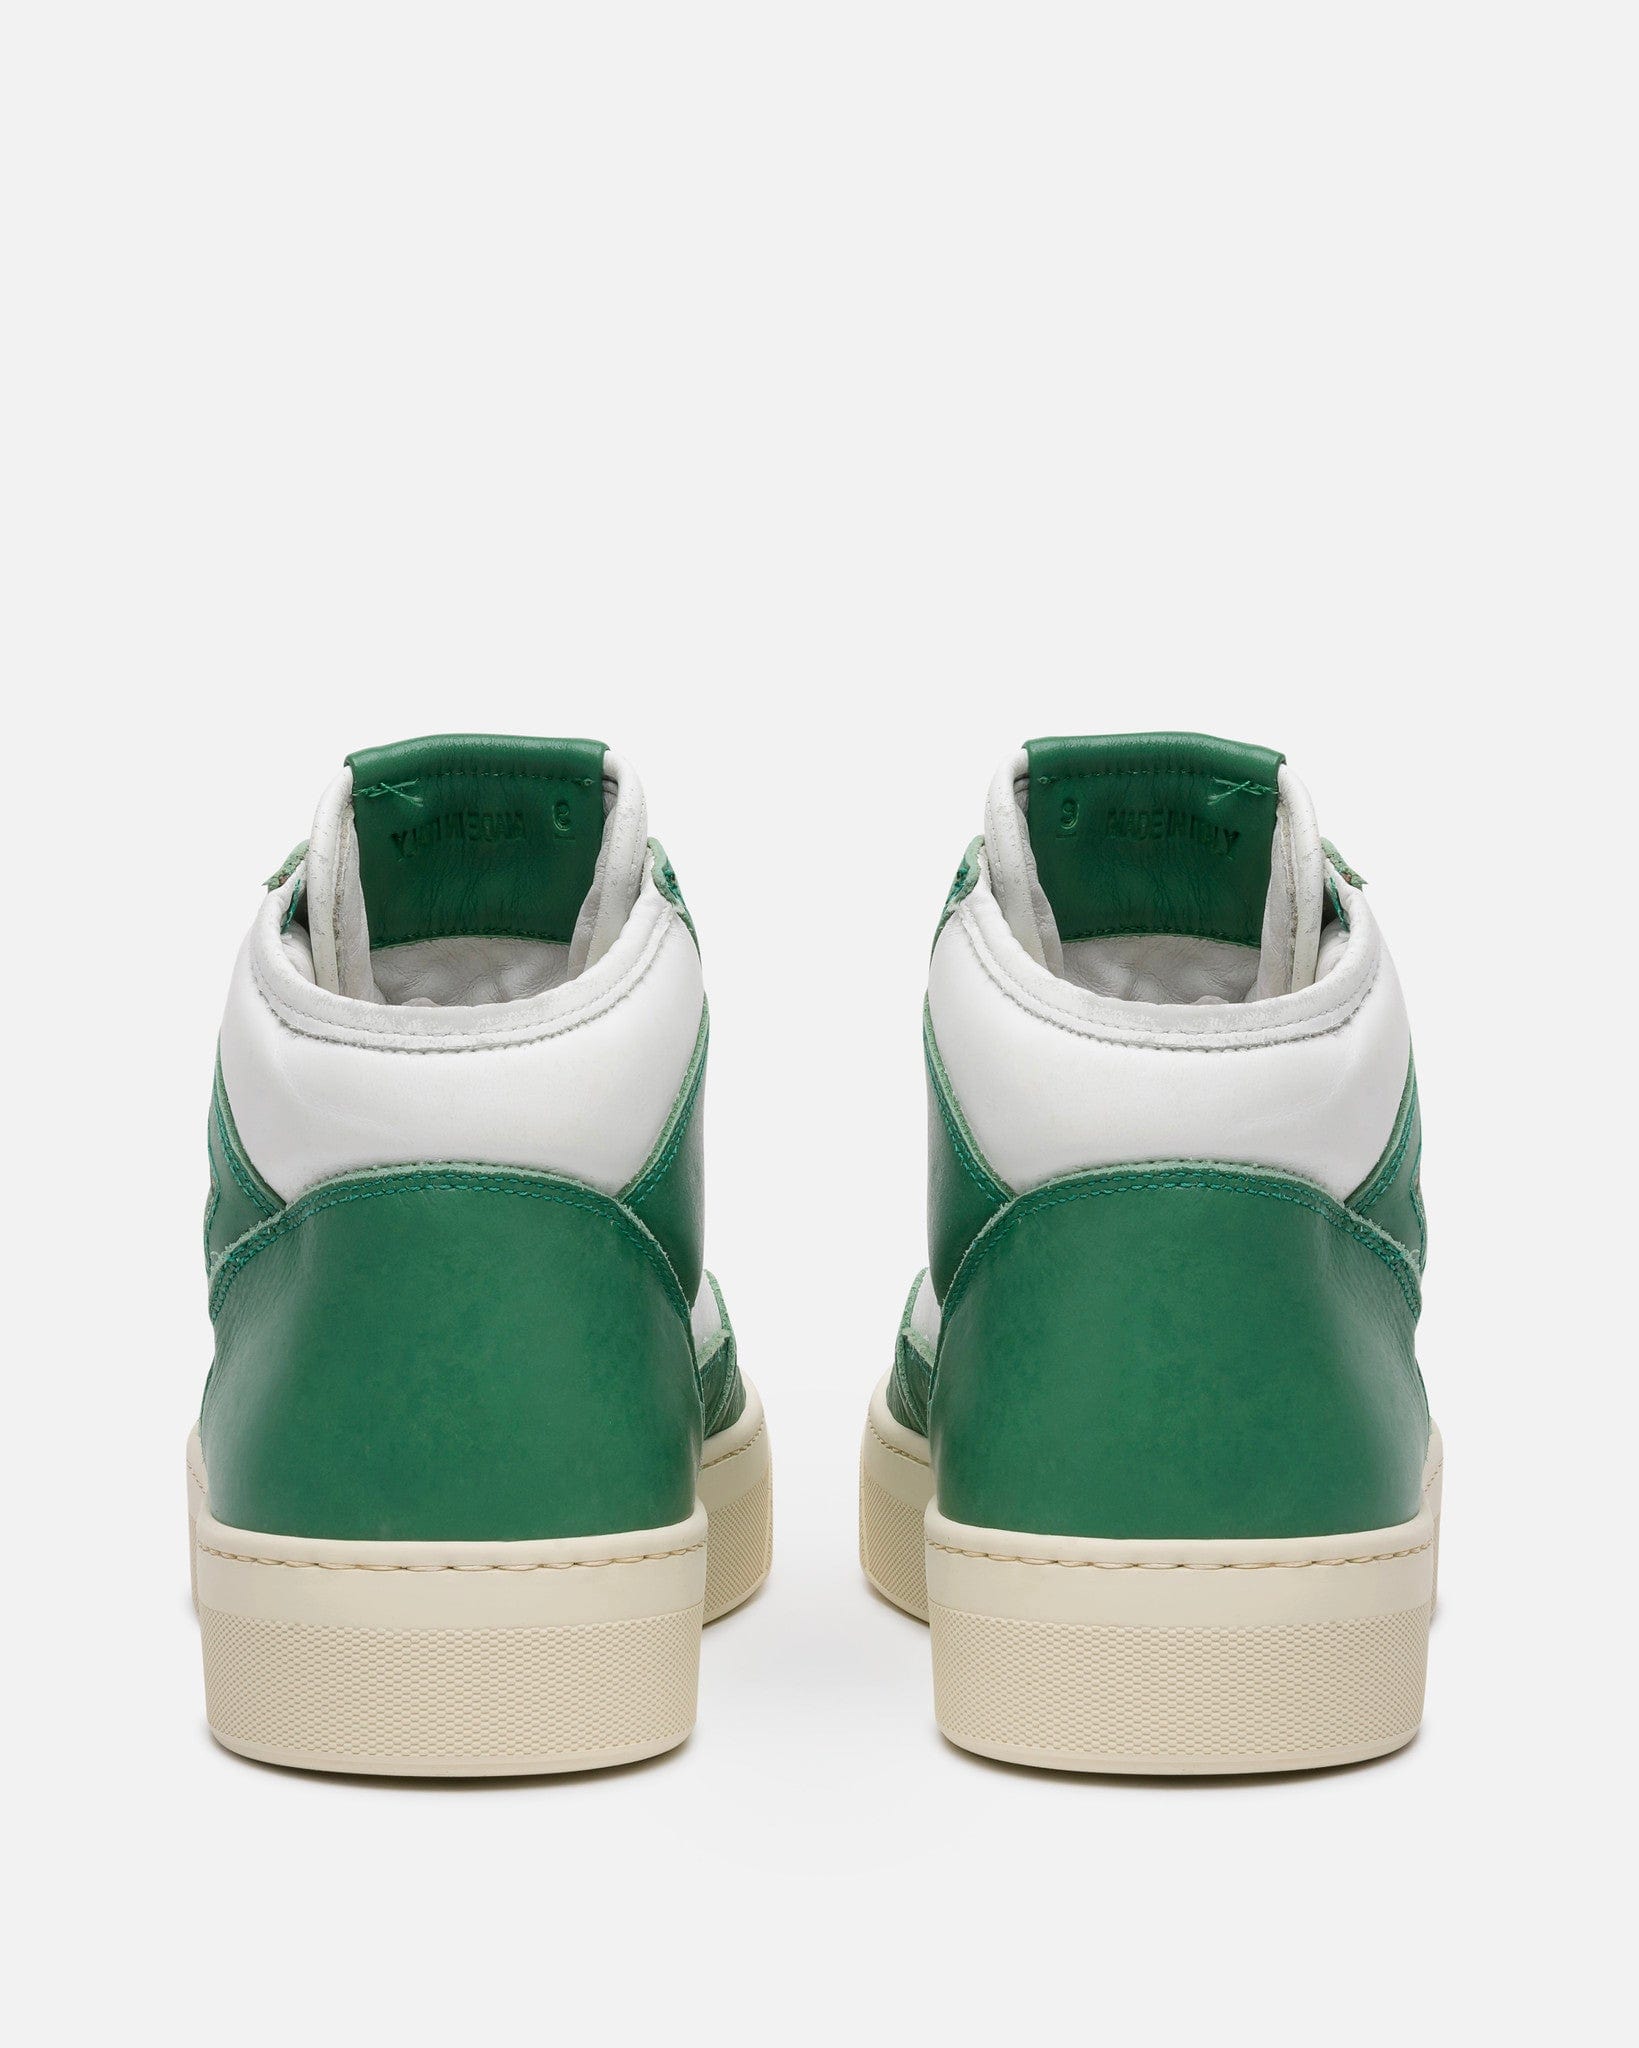 Rhude Men's Sneakers Rhude Cabriolets in Green/White